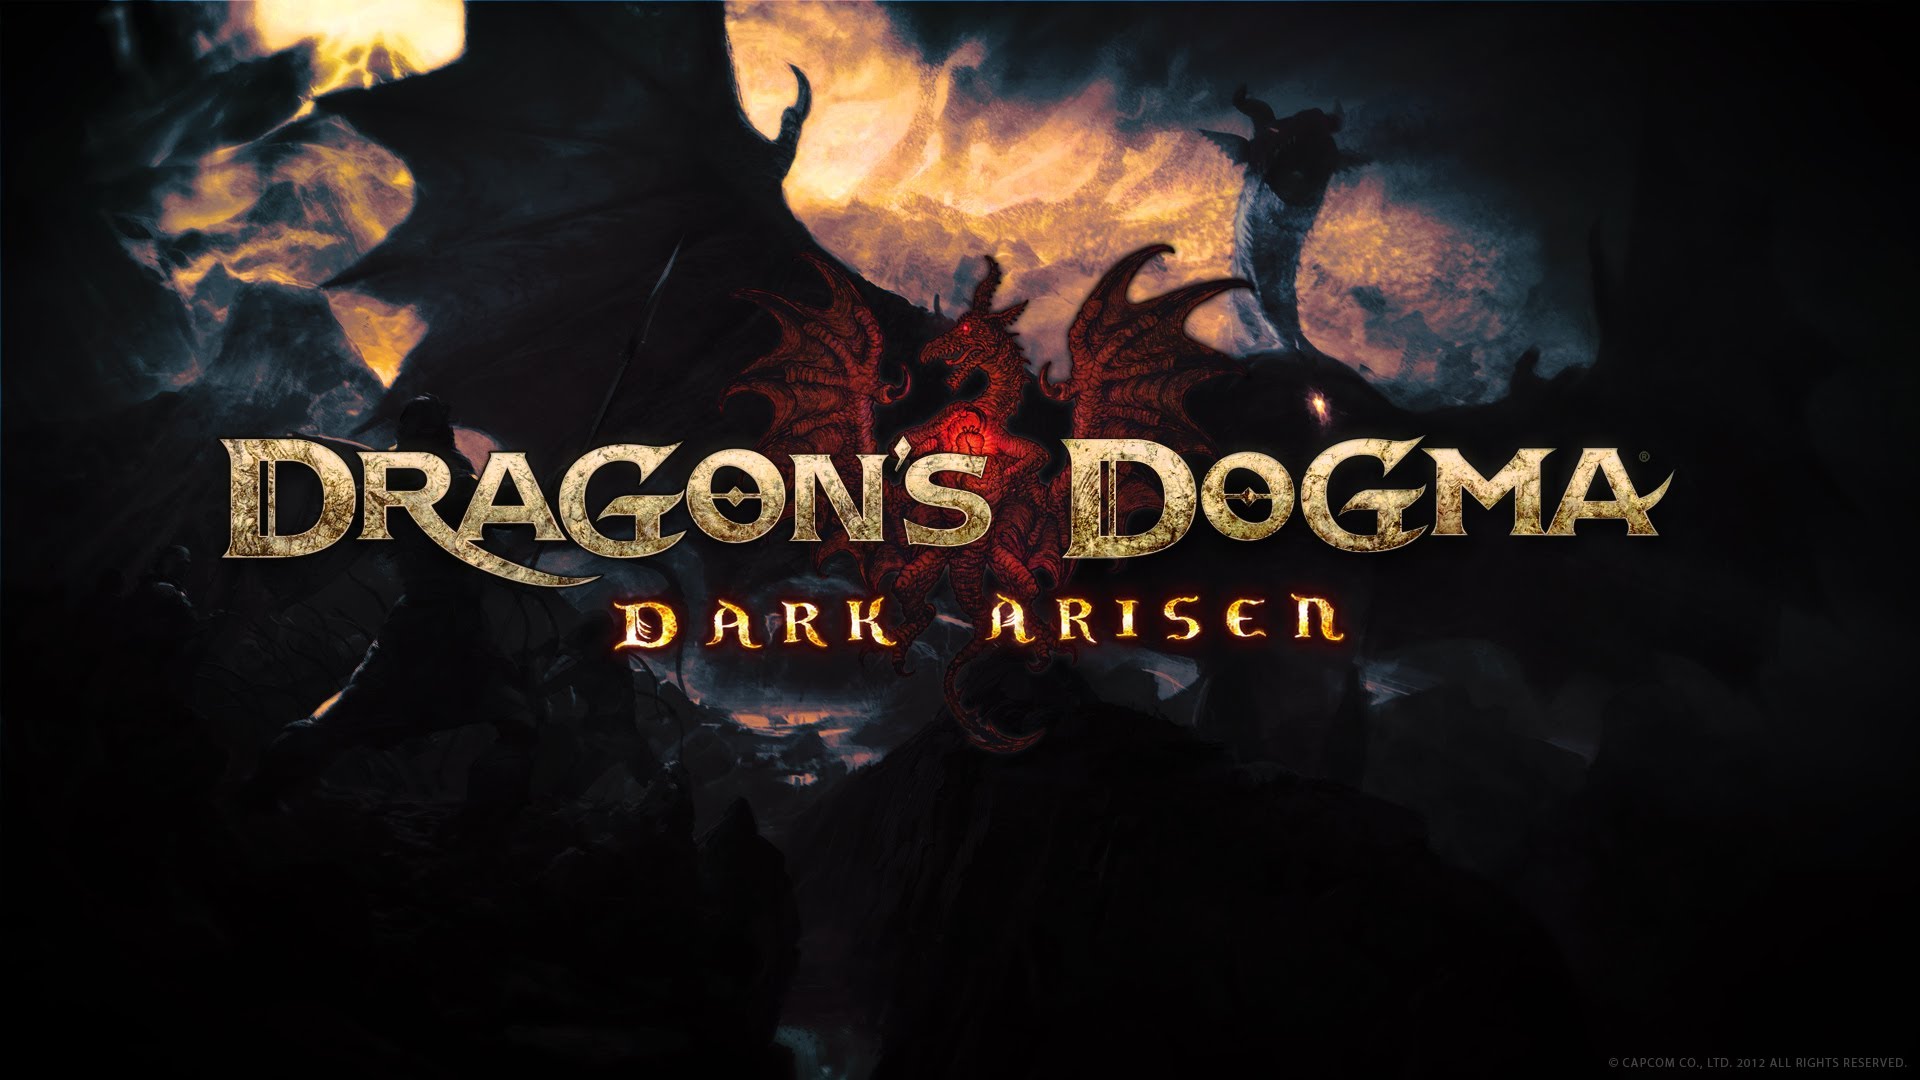 dragon’s dogma dark arisen game save file location